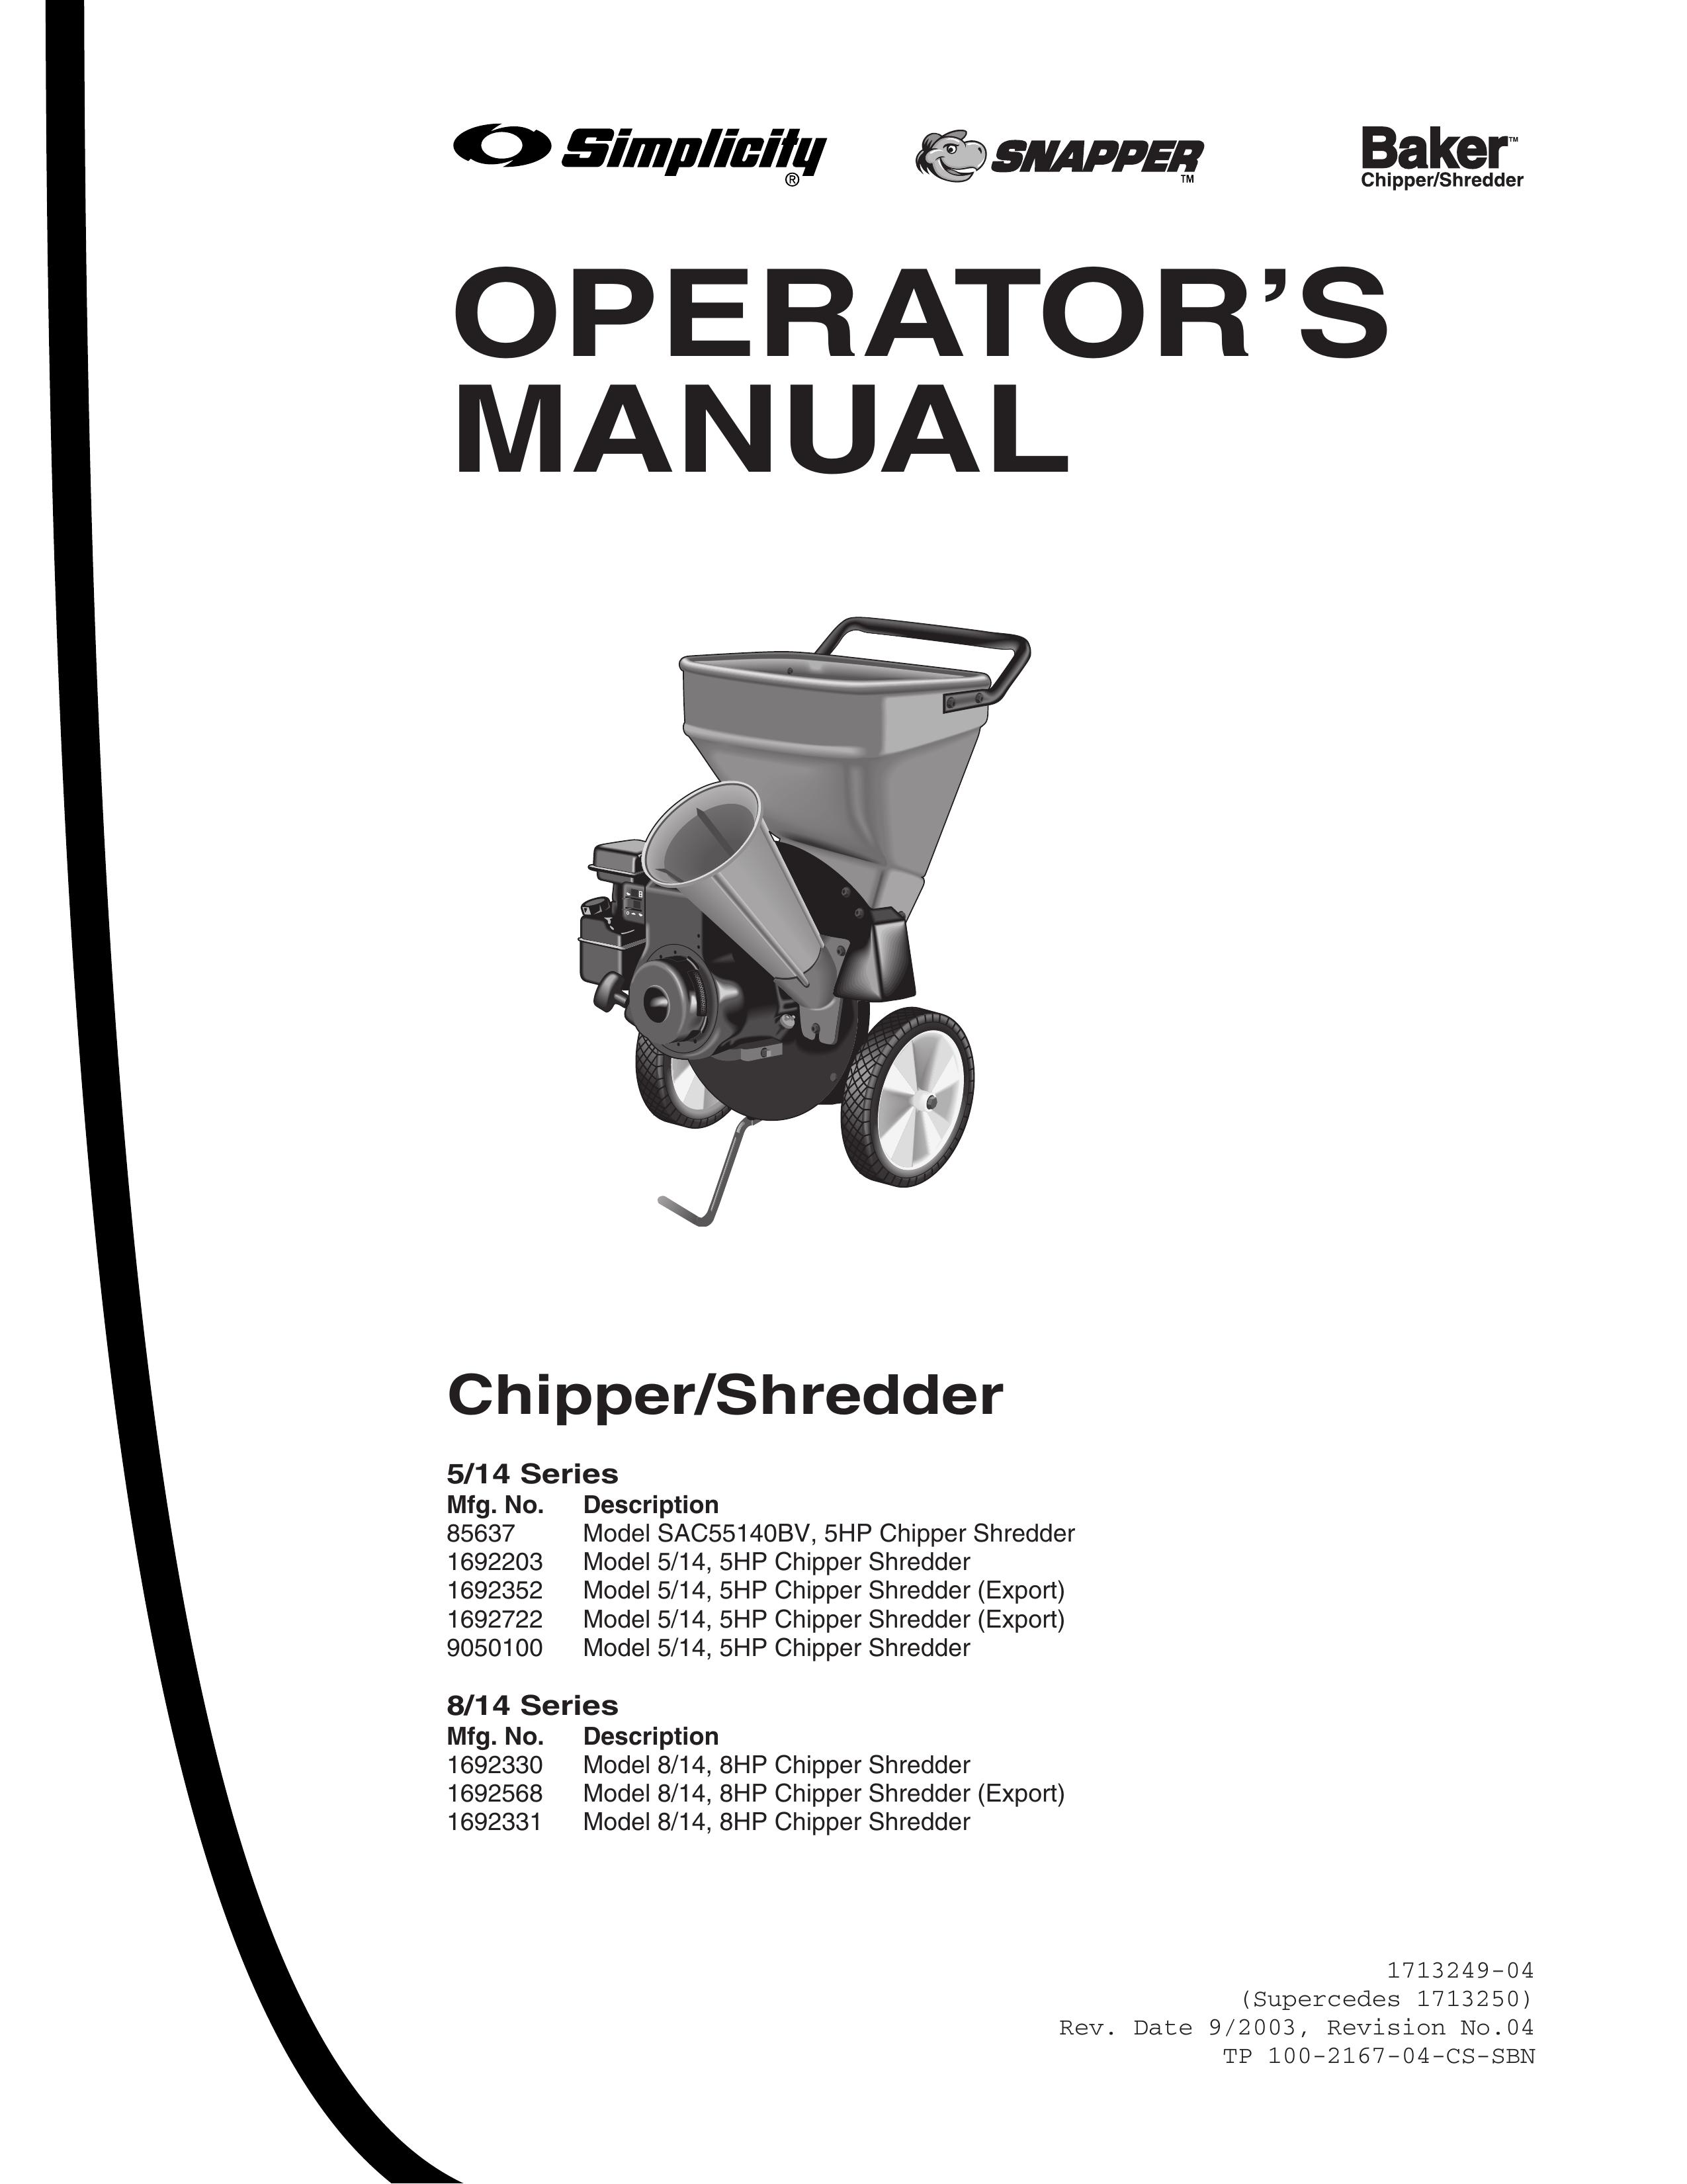 Snapper 5/14, 8/14 Chipper User Manual